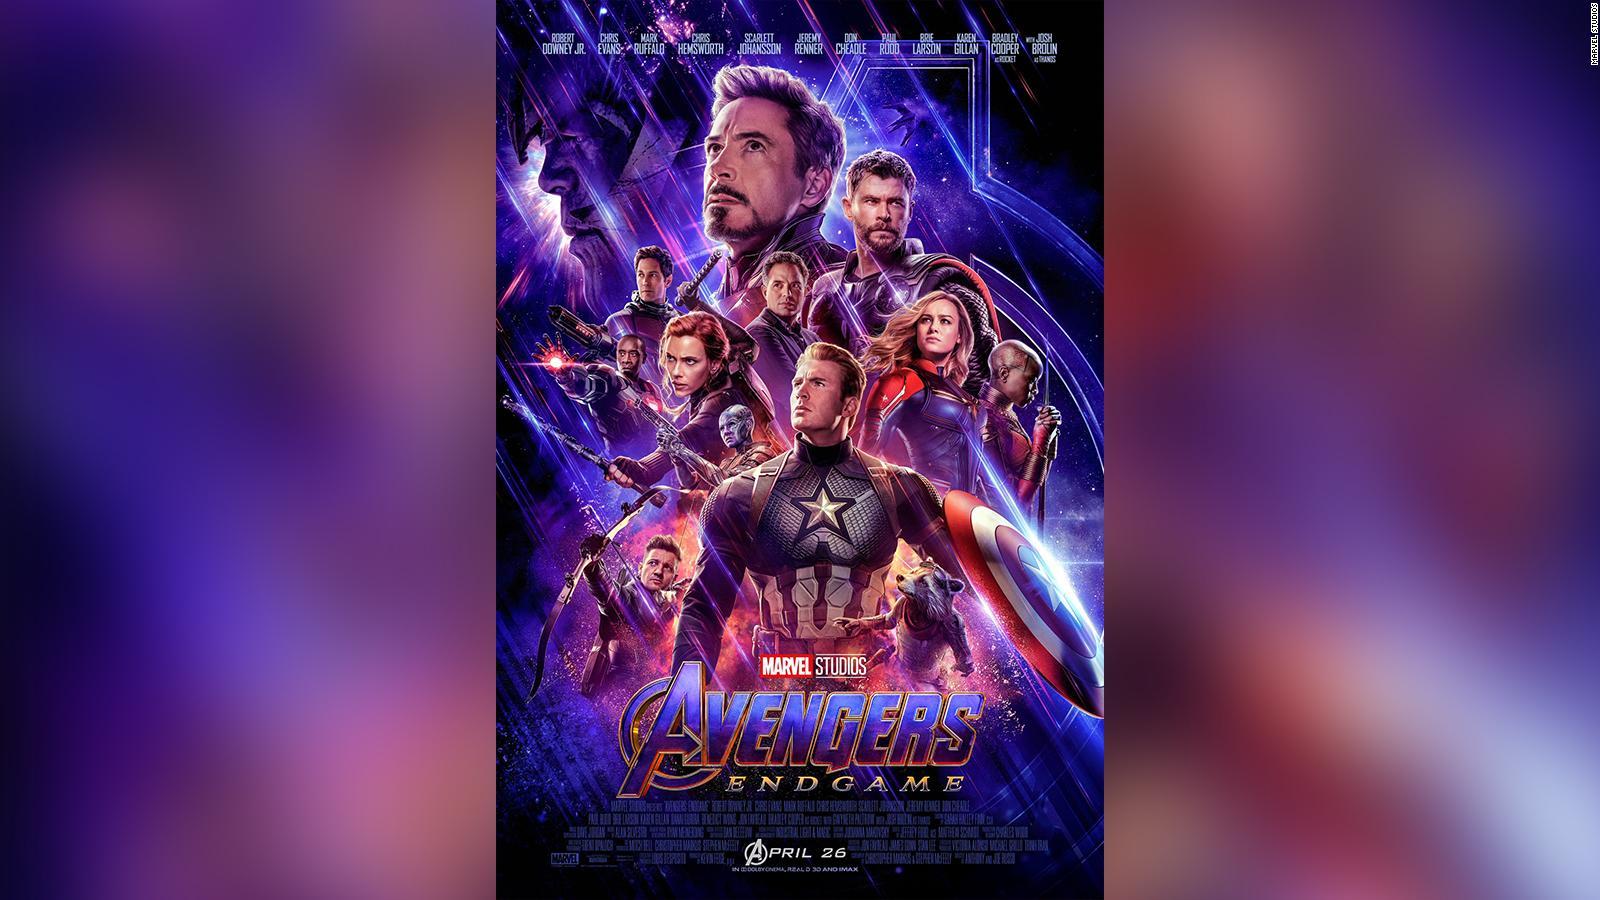 La preventa de entradas para ver Avengers: Endgame es un caos